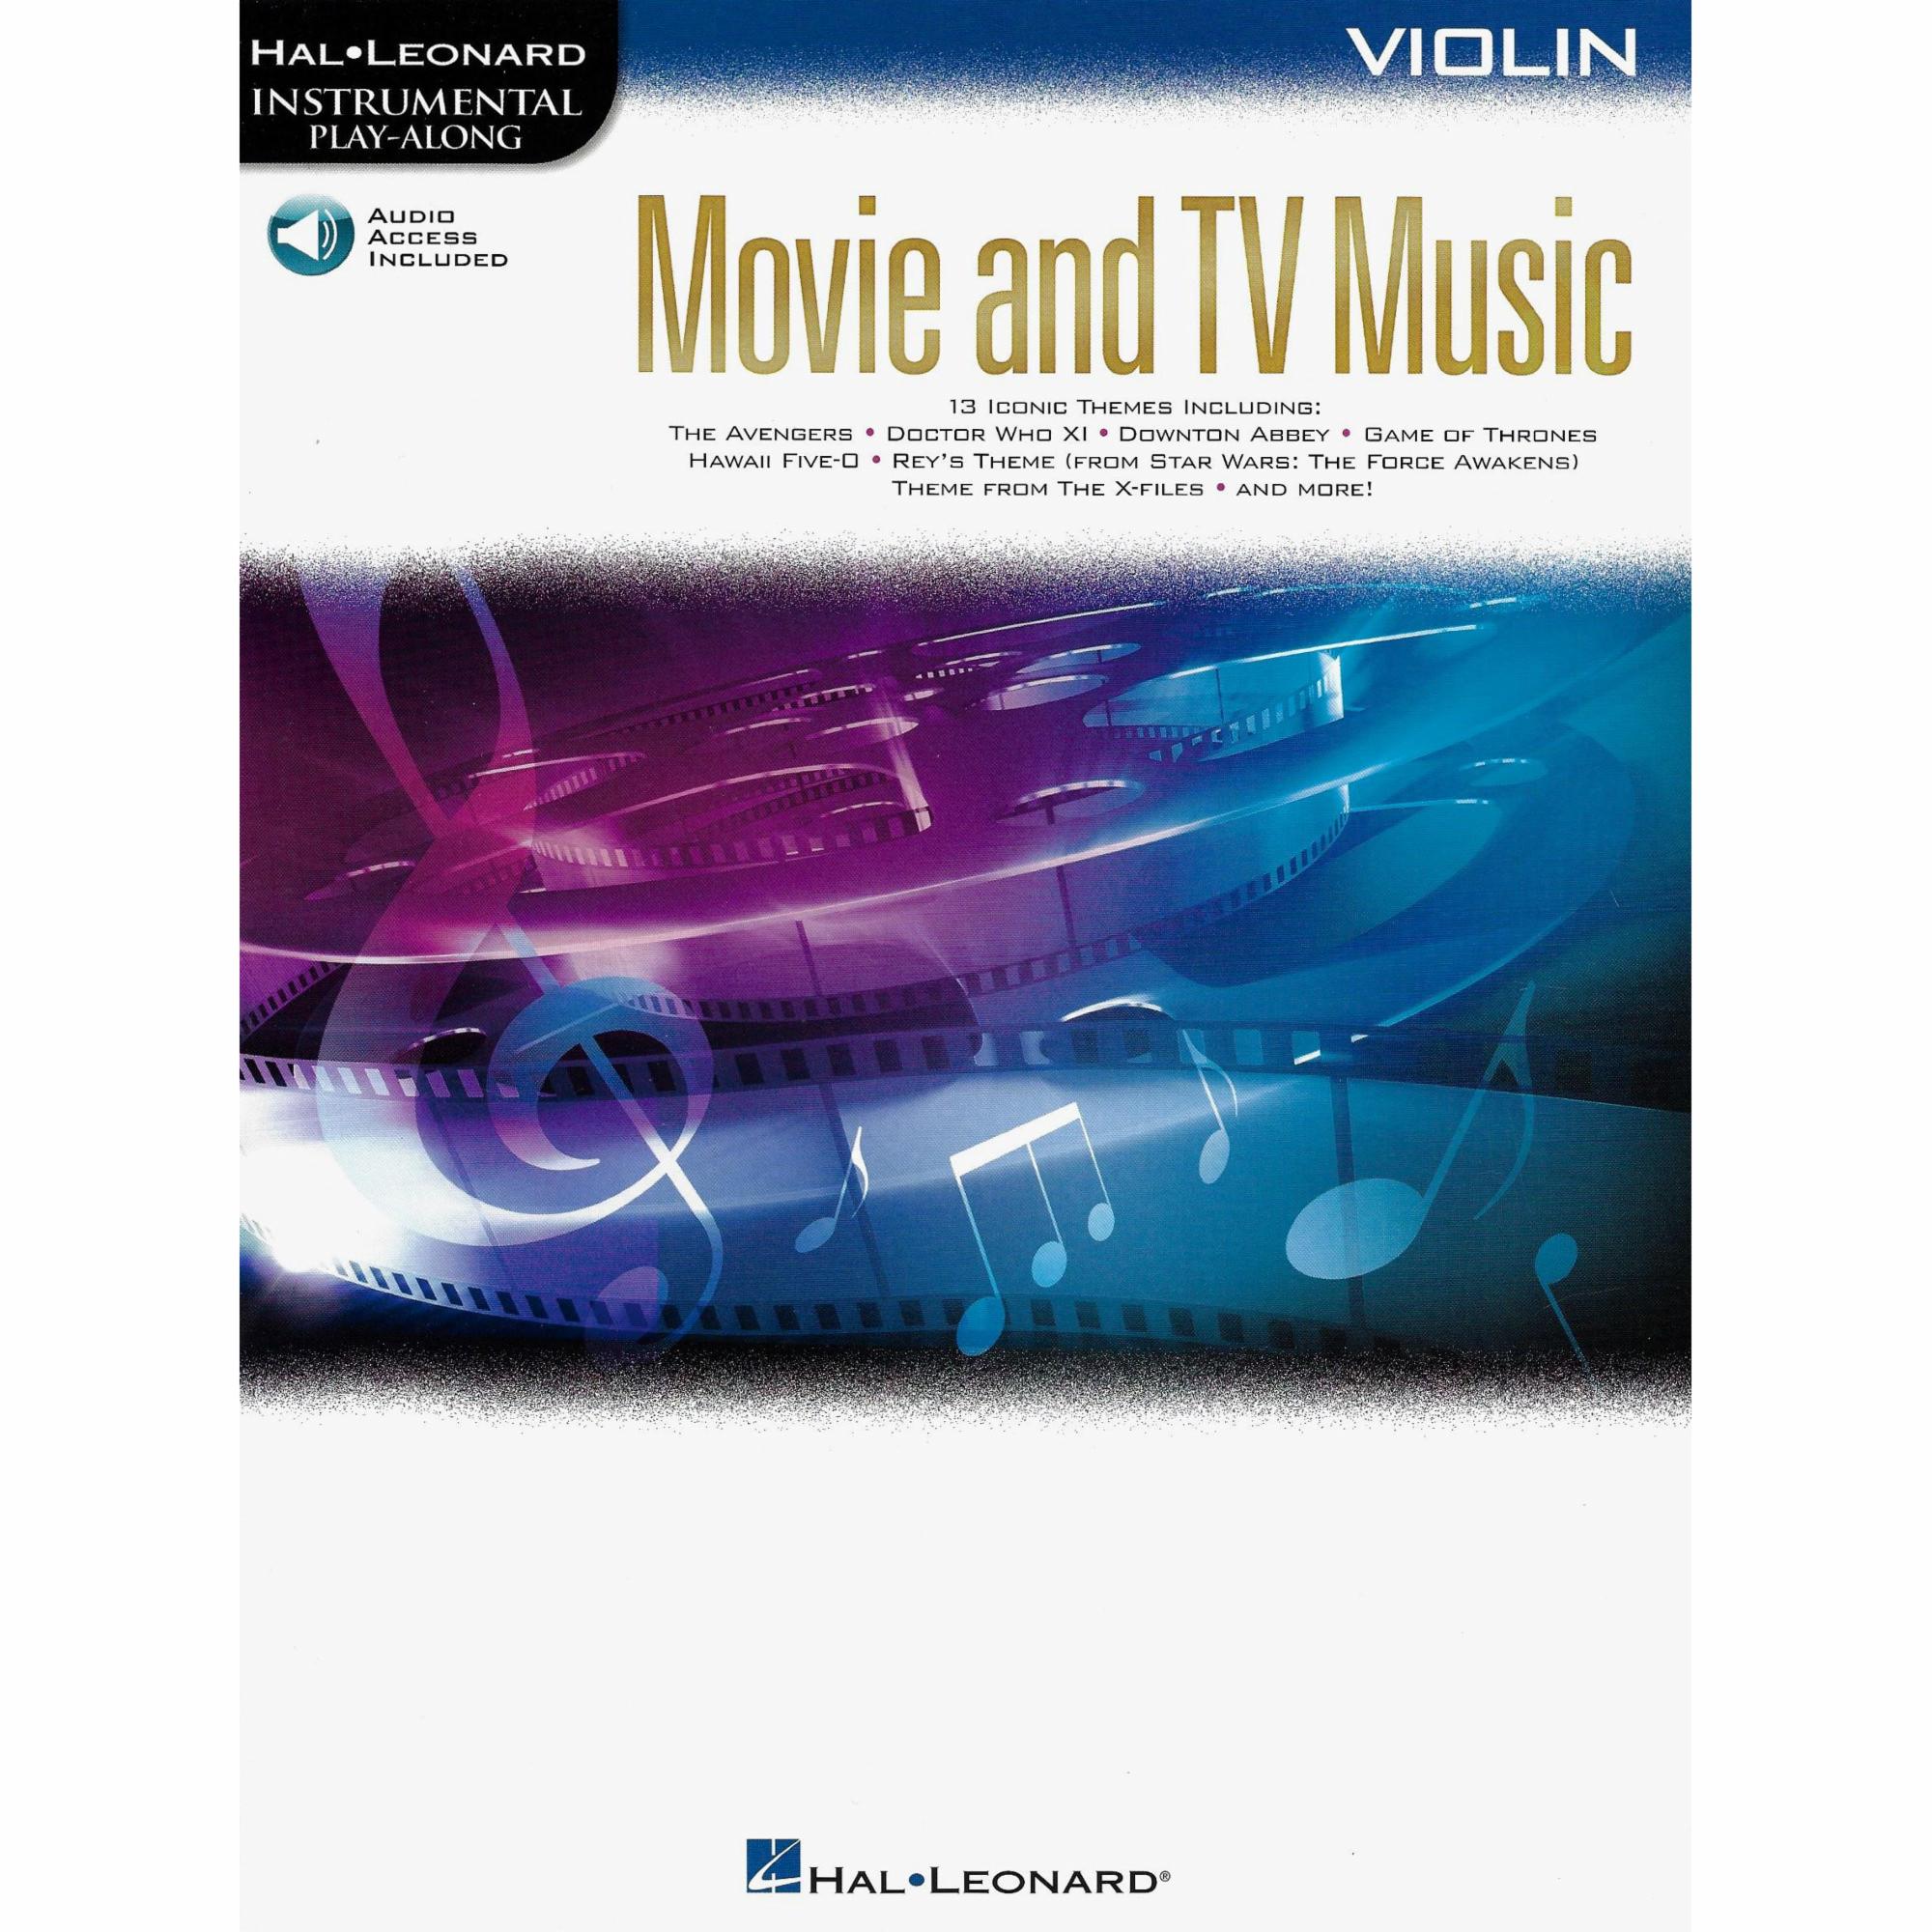 Movie and TV Music for Violin, Viola, or Cello